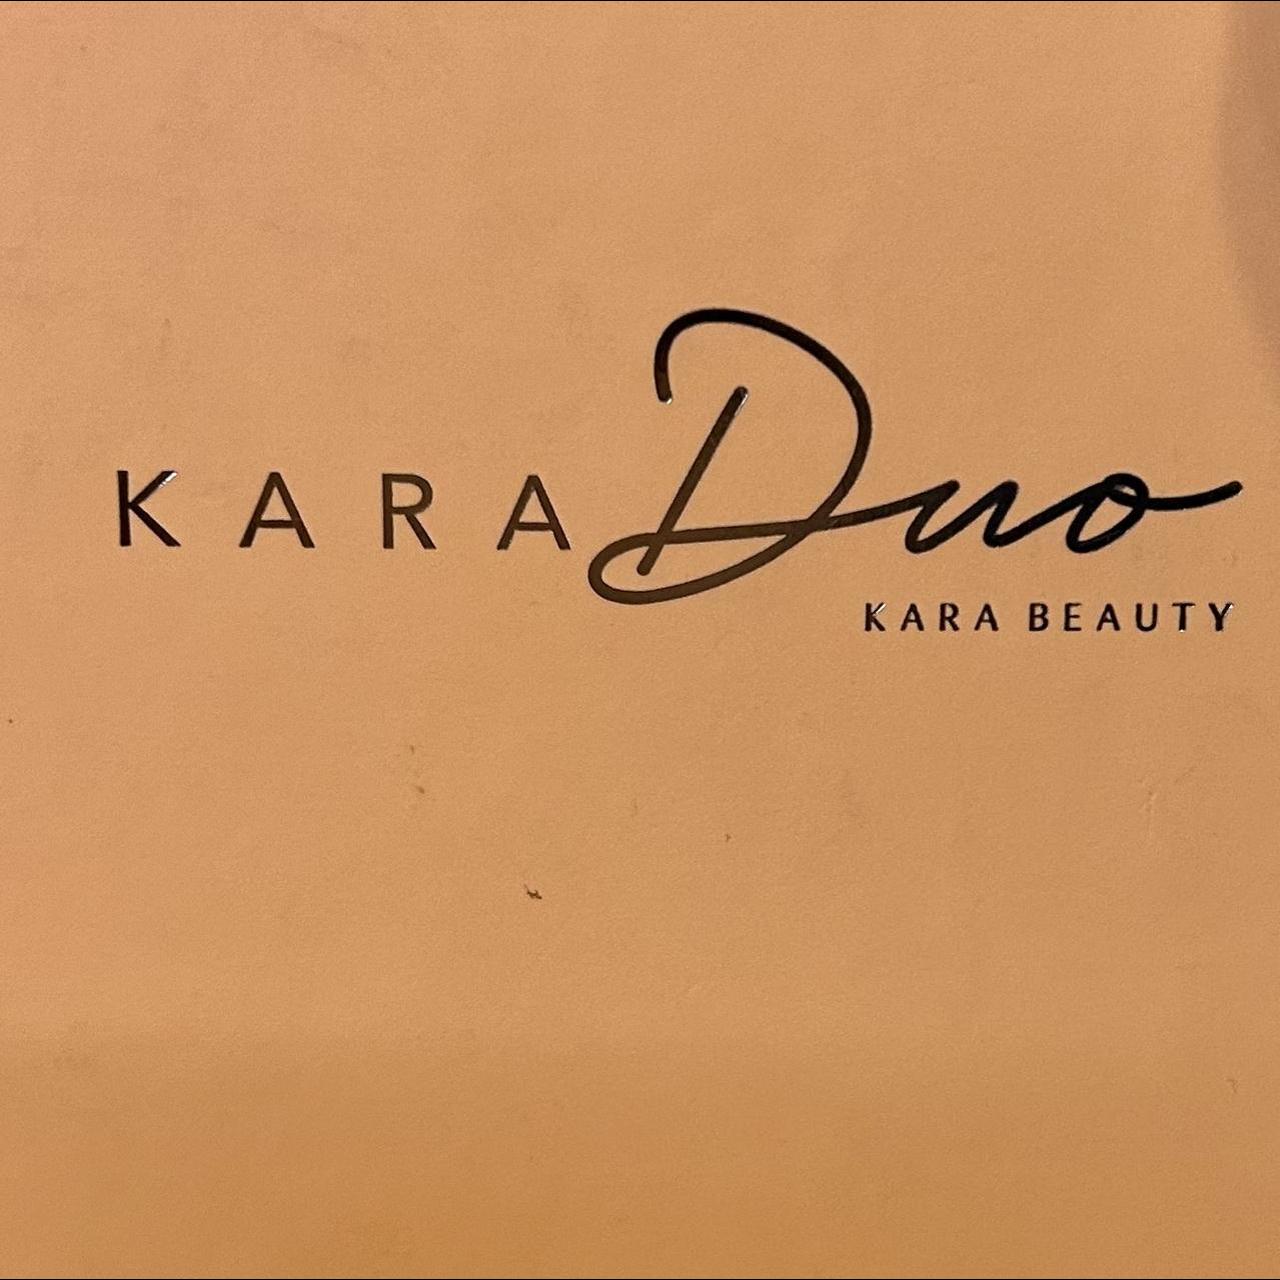 Kara Multi Makeup (4)